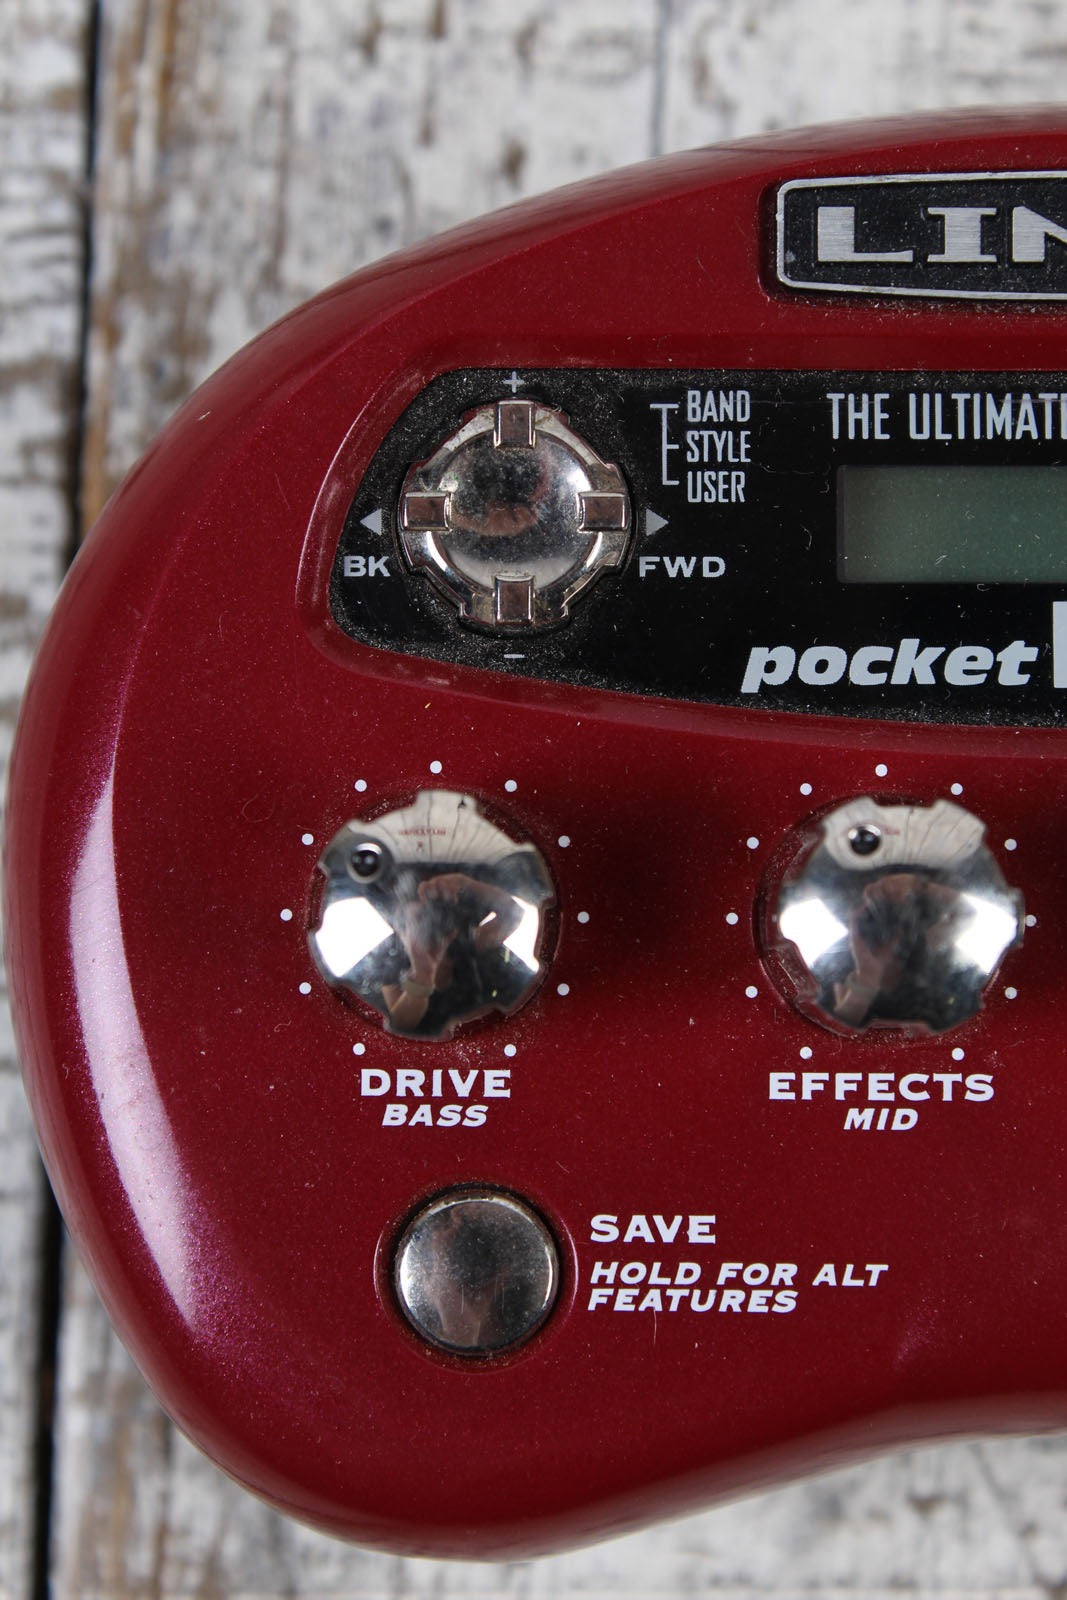 Line 6 Line 6 Pocket POD Guitar Multi-Effects Processor